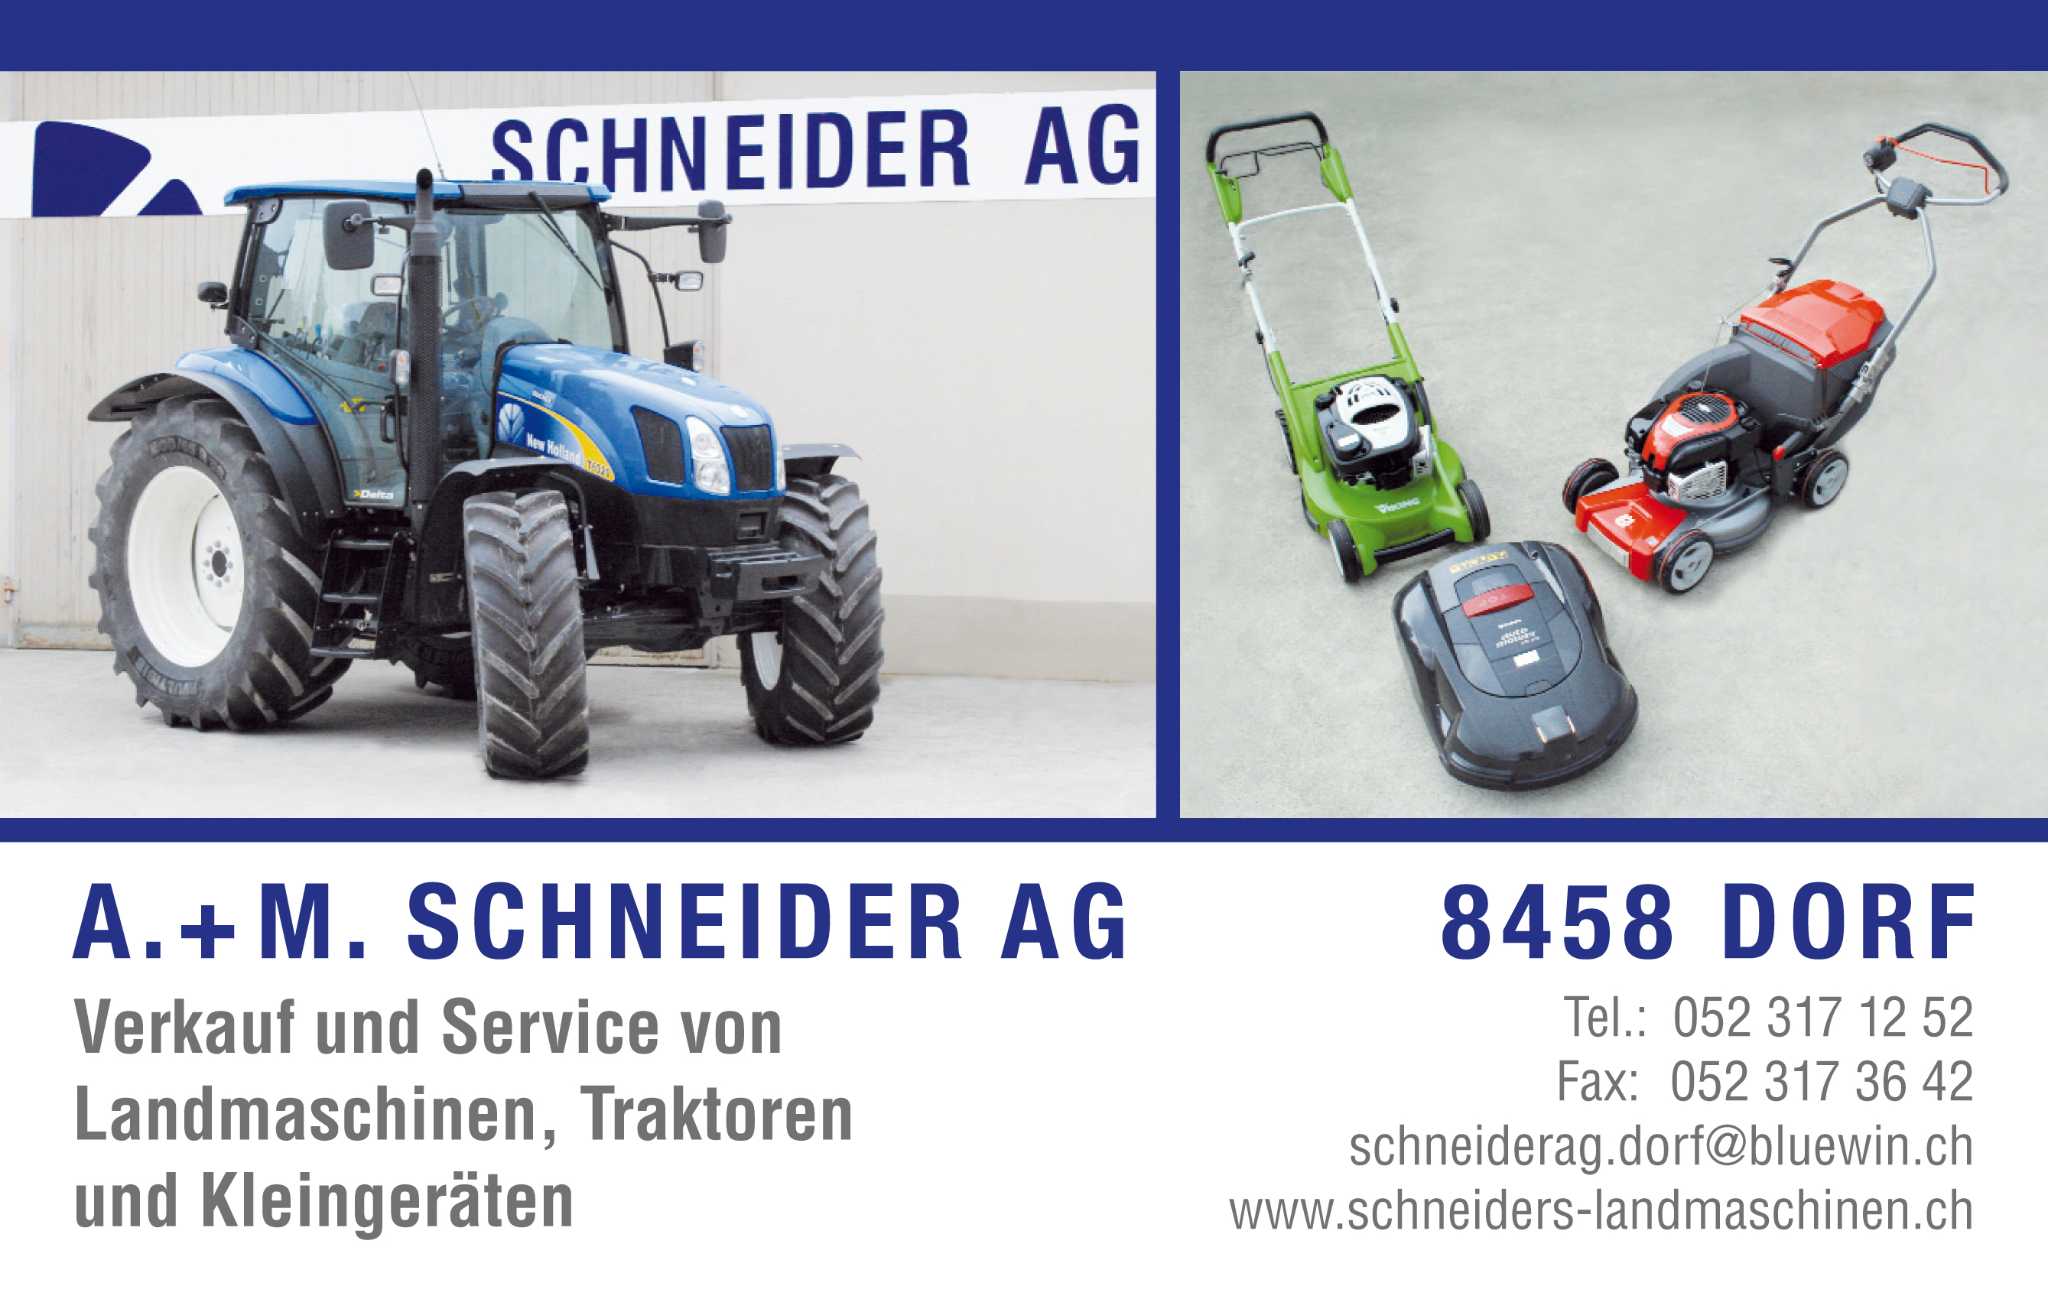 A. + M. Schneider AG